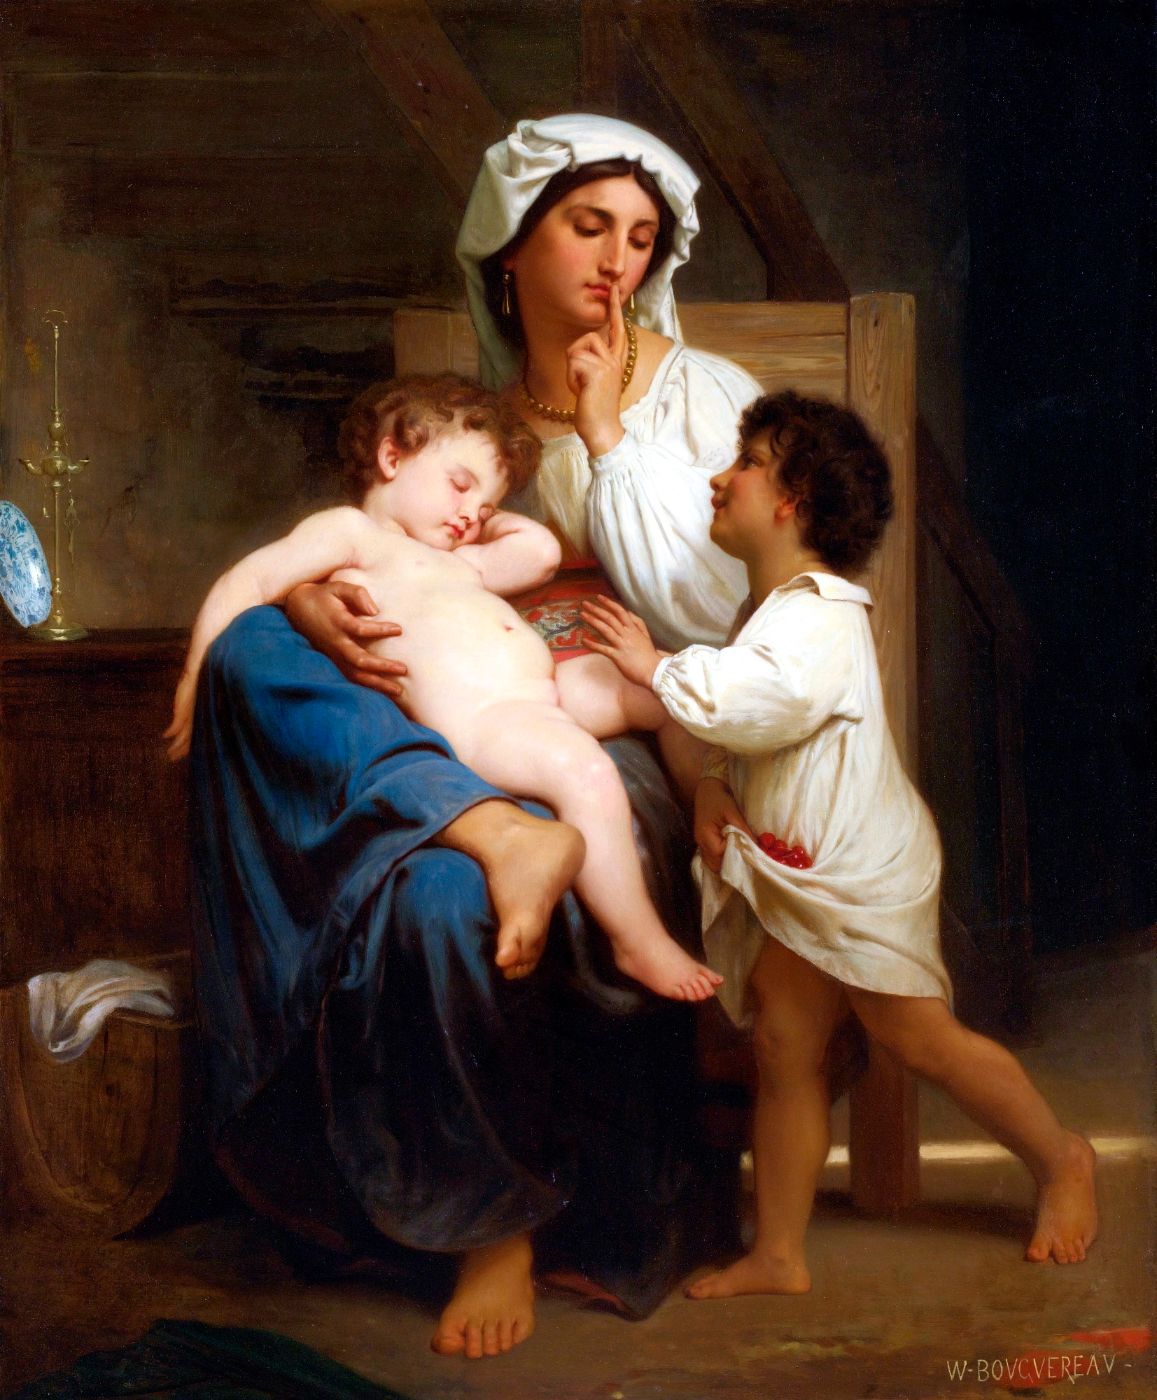 188 William Bouguereau (FRENCH, 1825-1905) - LE SOMMEIL